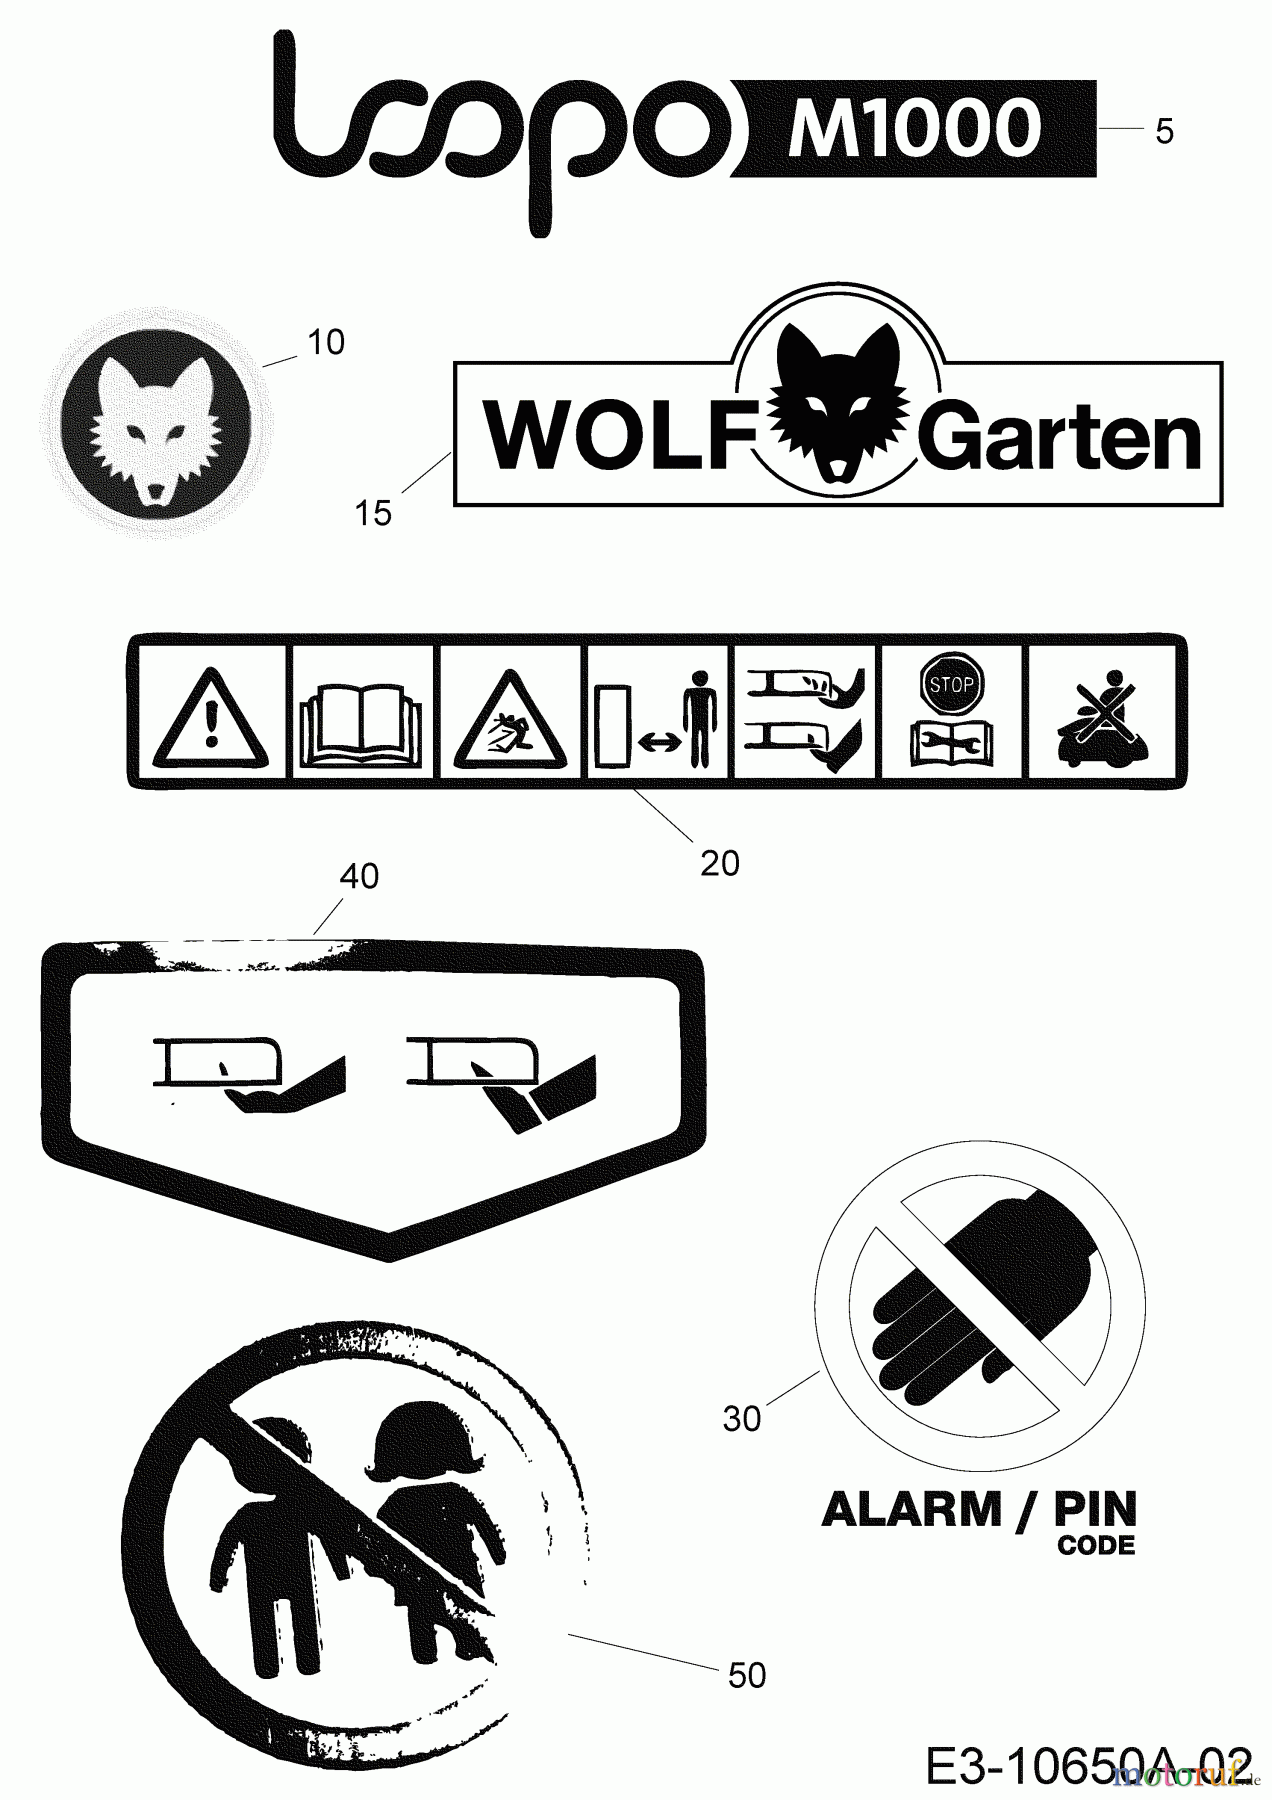  Wolf-Garten Mähroboter Loopo M1000 22BCBA-A650  (2019) Aufkleber